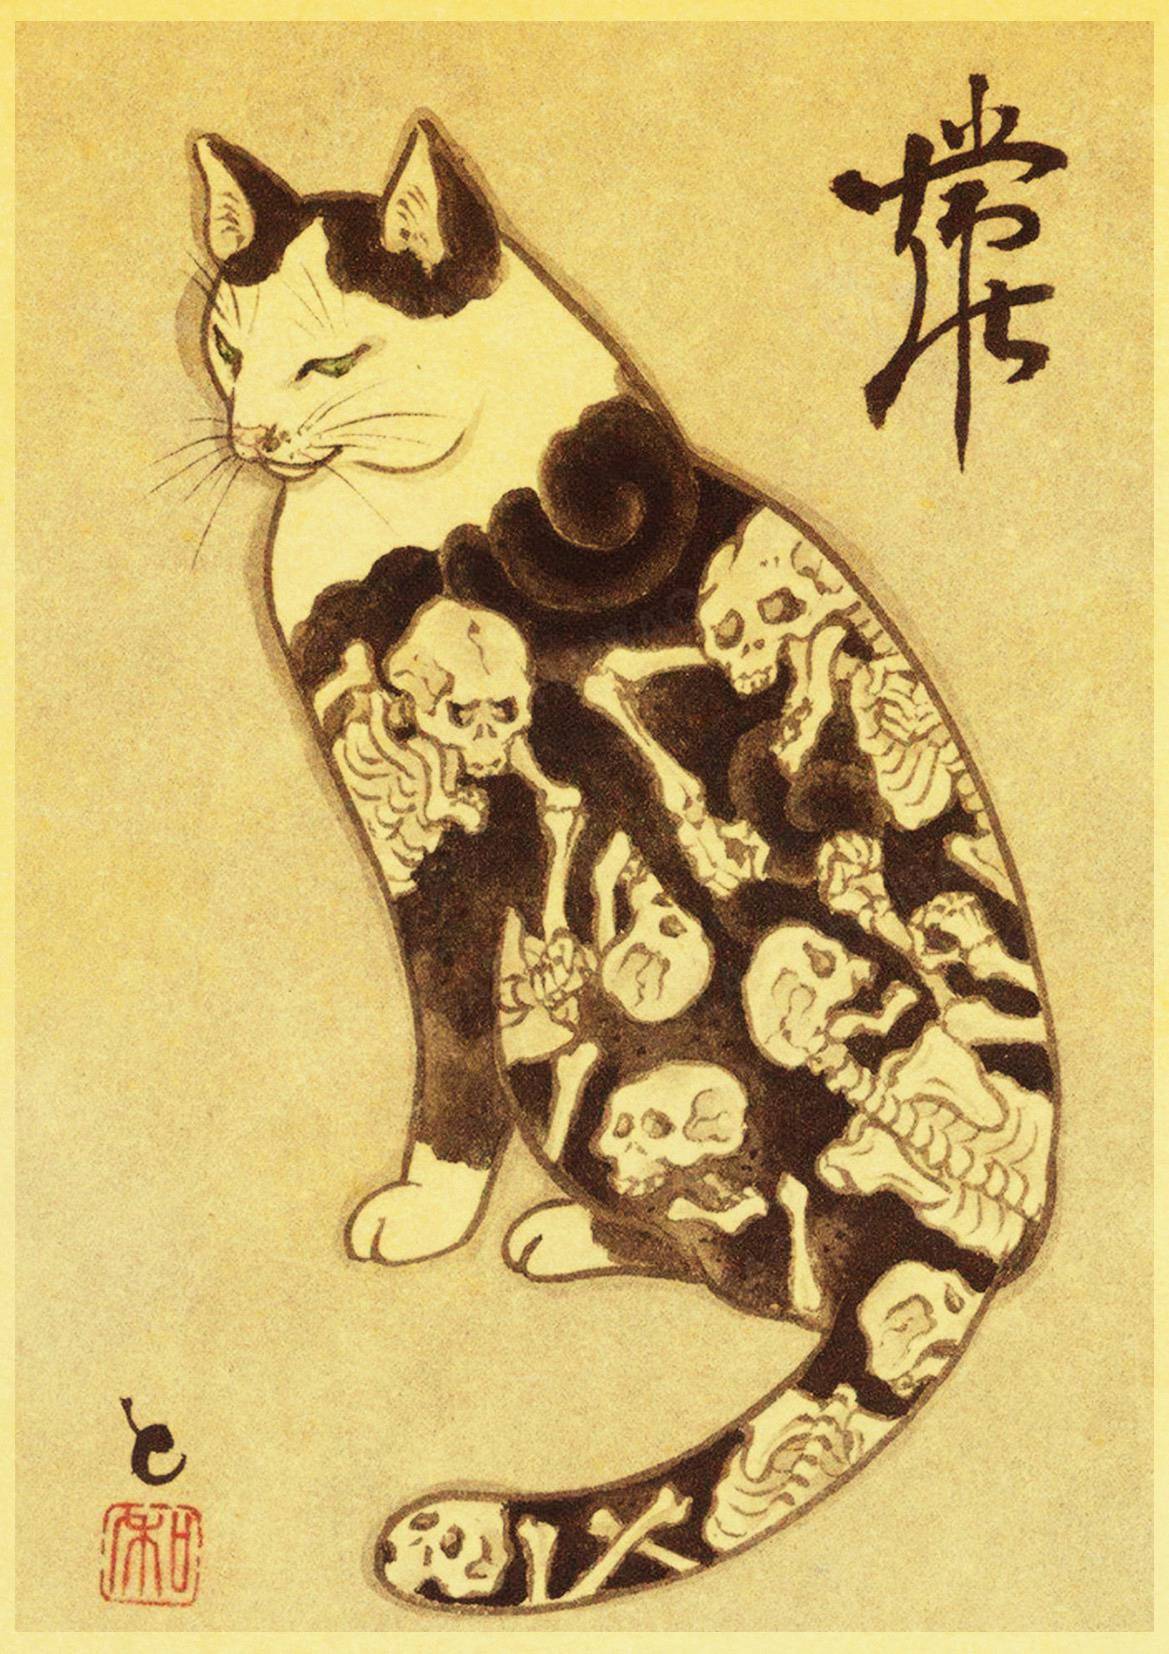 Japanese Samurai Cat Ramen Nostalgia Poster Home Decor Art Decor Hight Quality Cartoon Painting Animal Poster Wall Stickers